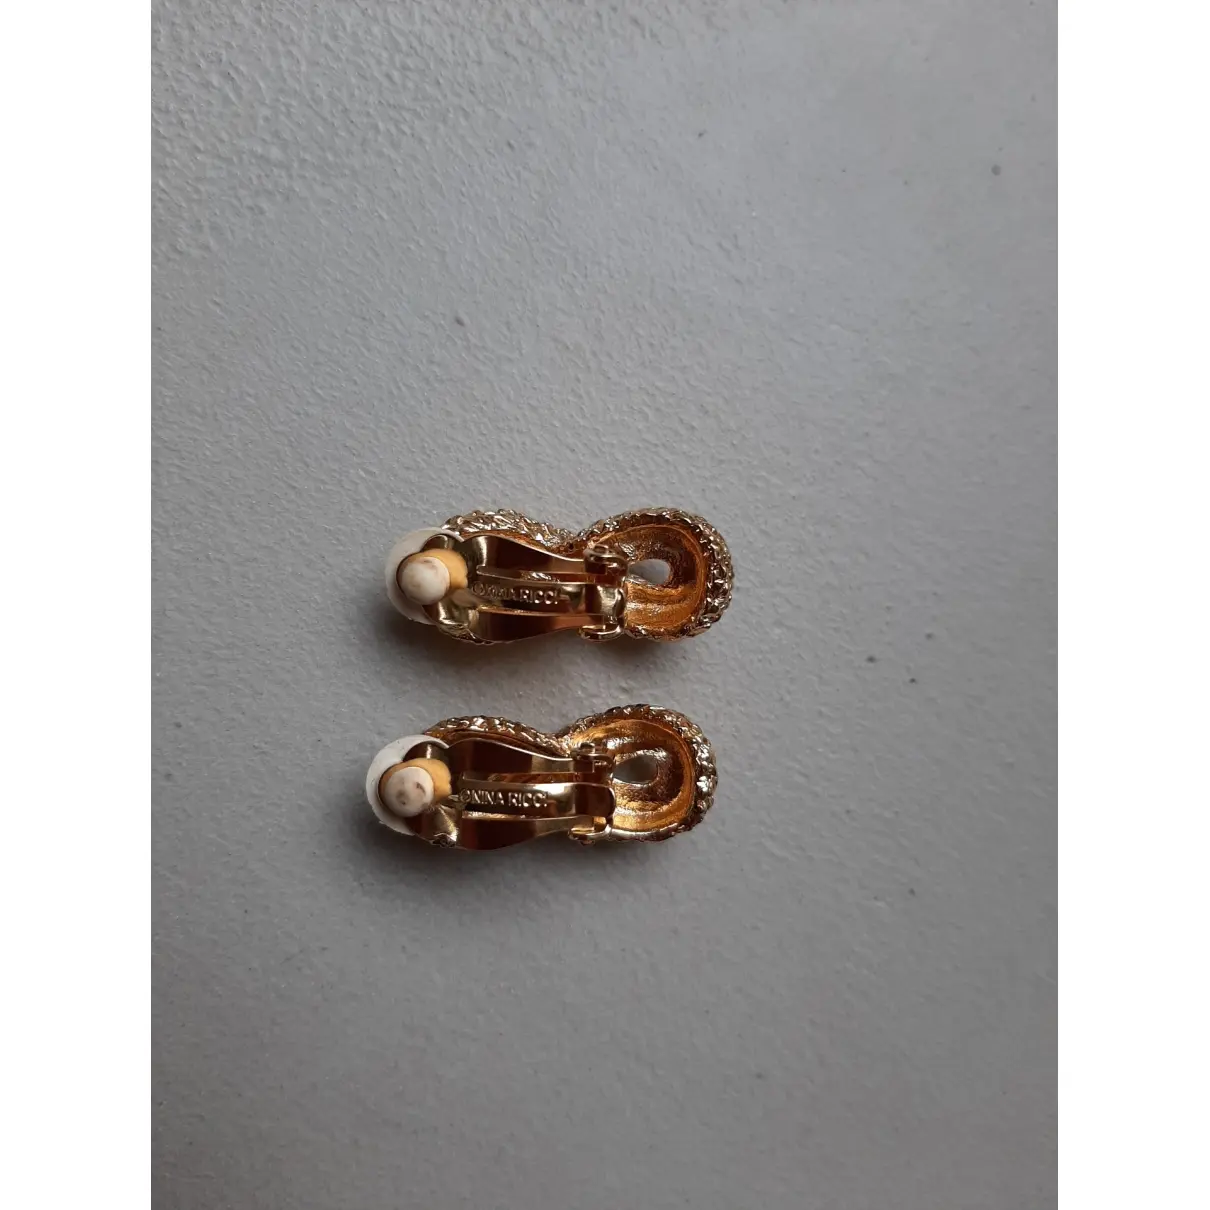 Buy Nina Ricci Earrings online